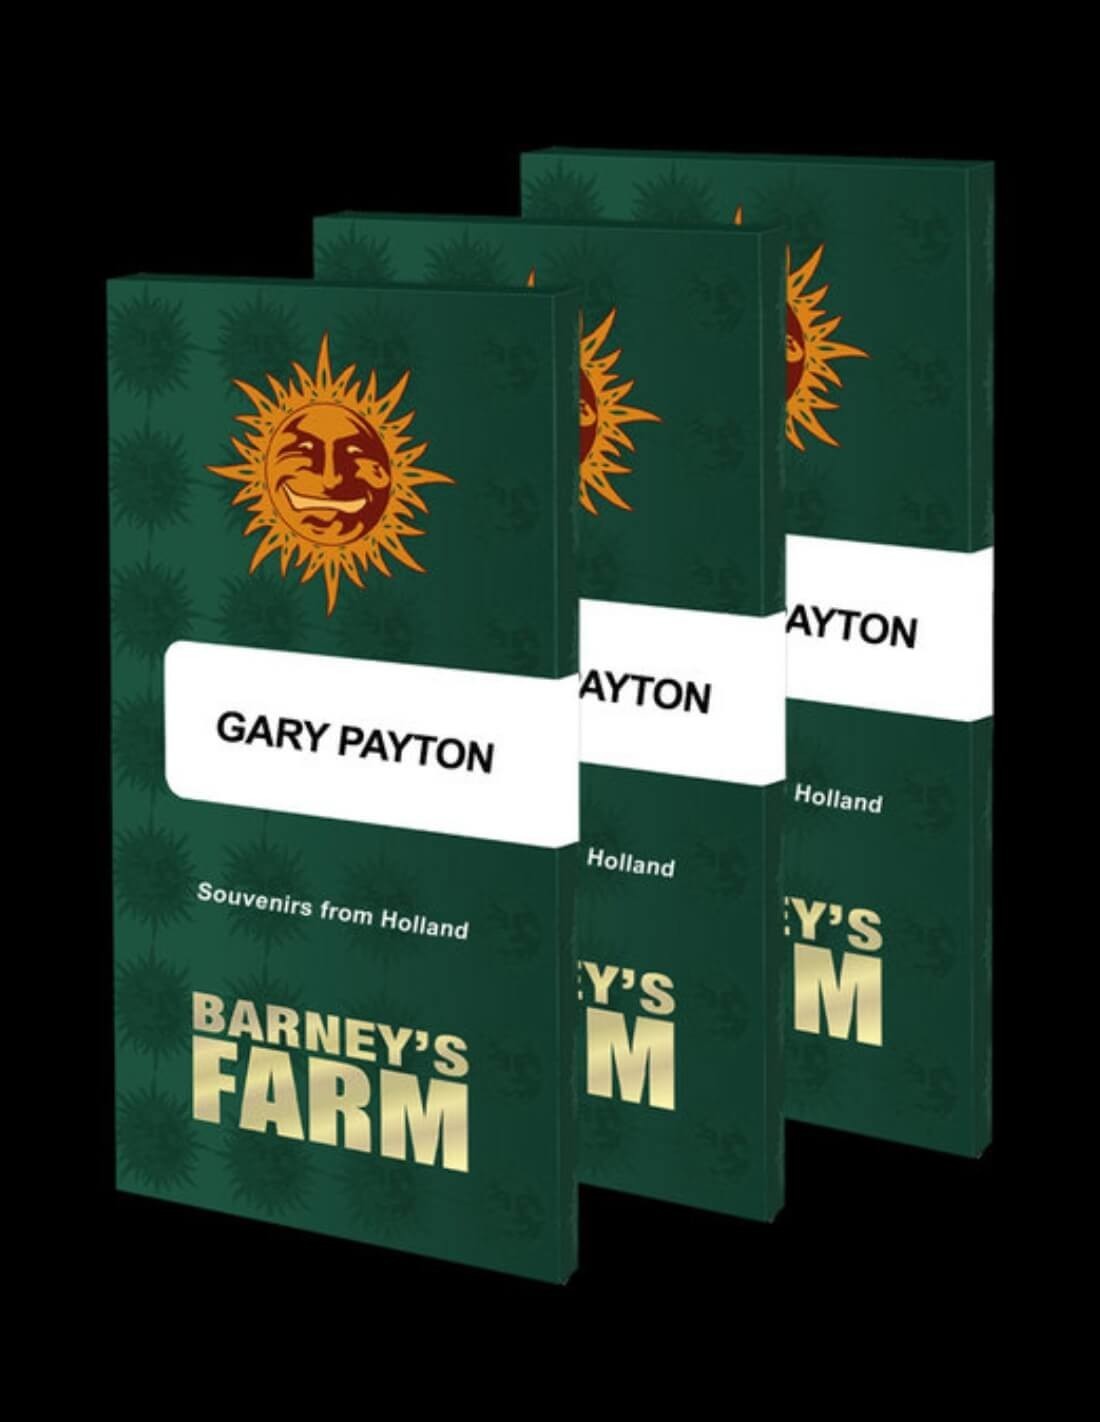 Gary Payton por Barney's Farm Seeds